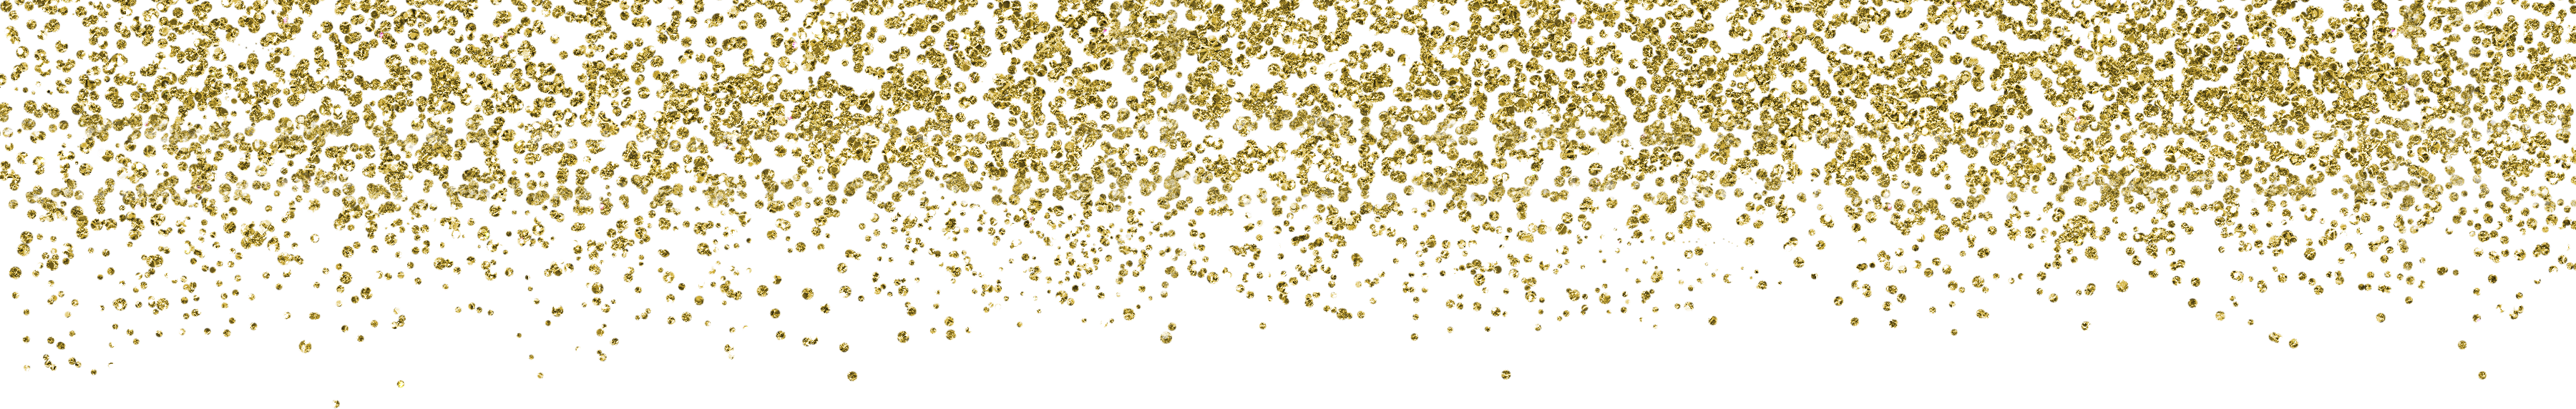 Glitter Gold Sparkle PNG imagen de alta calidad